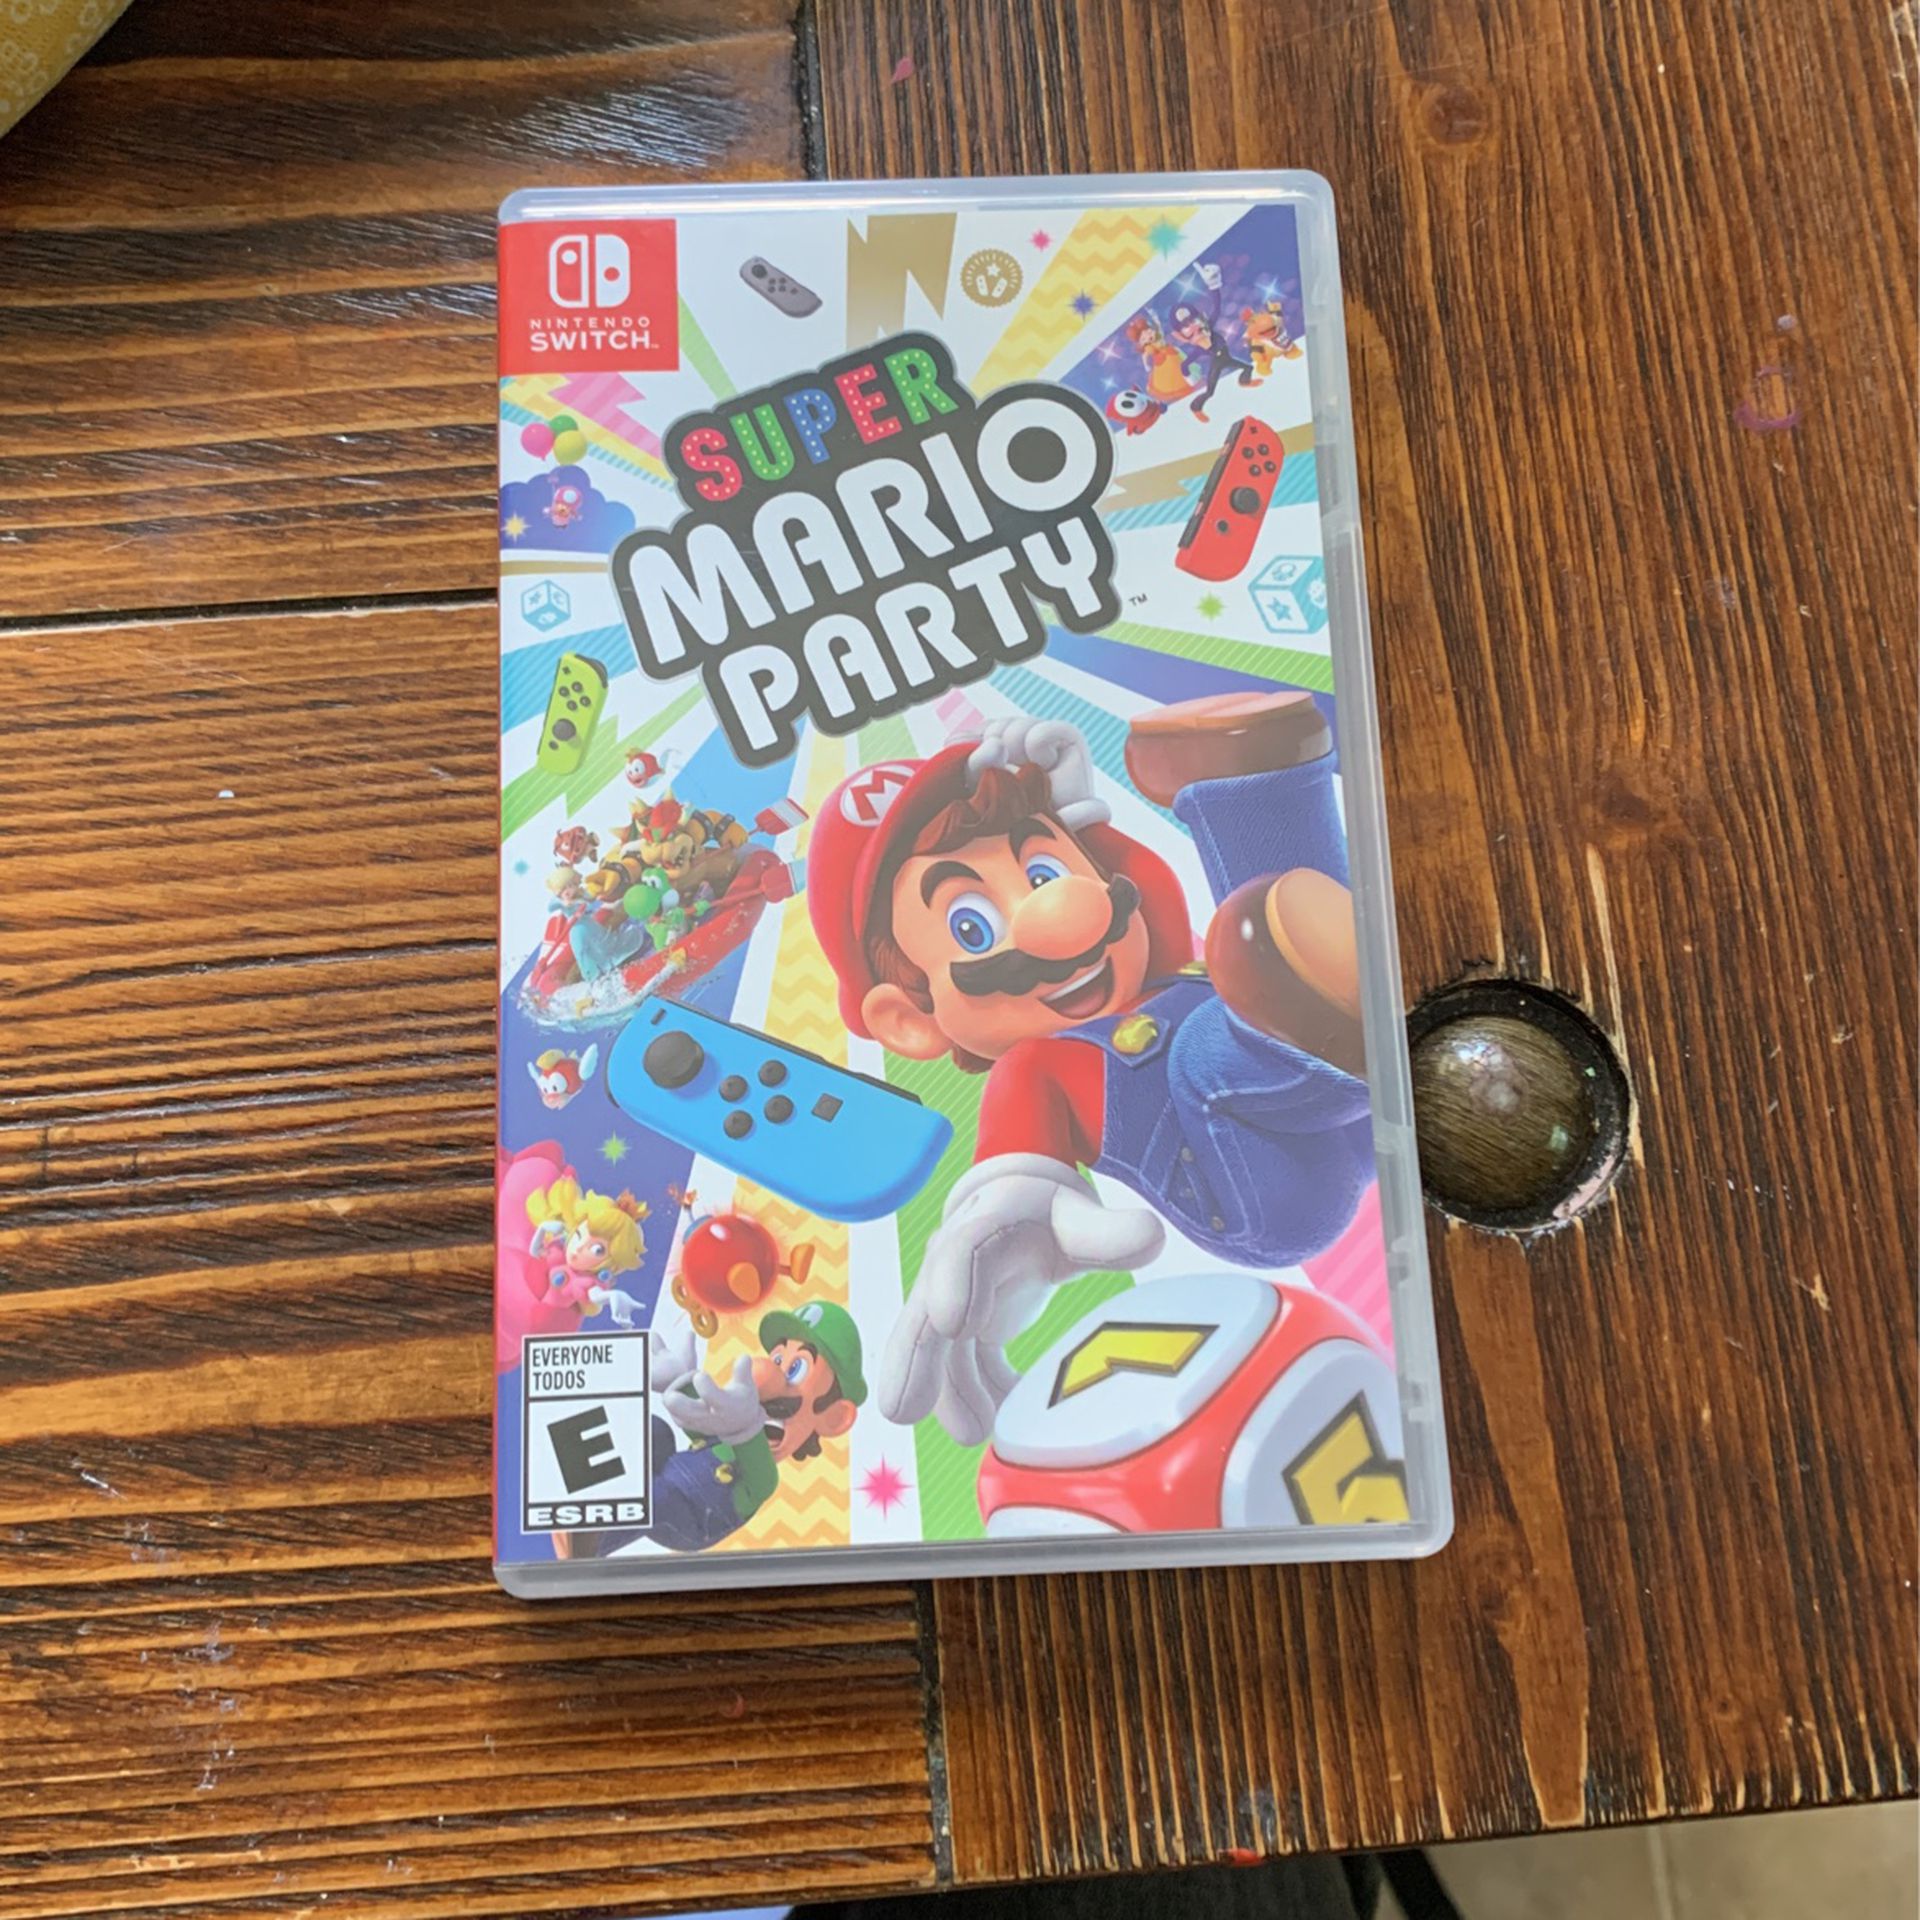 Super Mario party - Nintendo switch